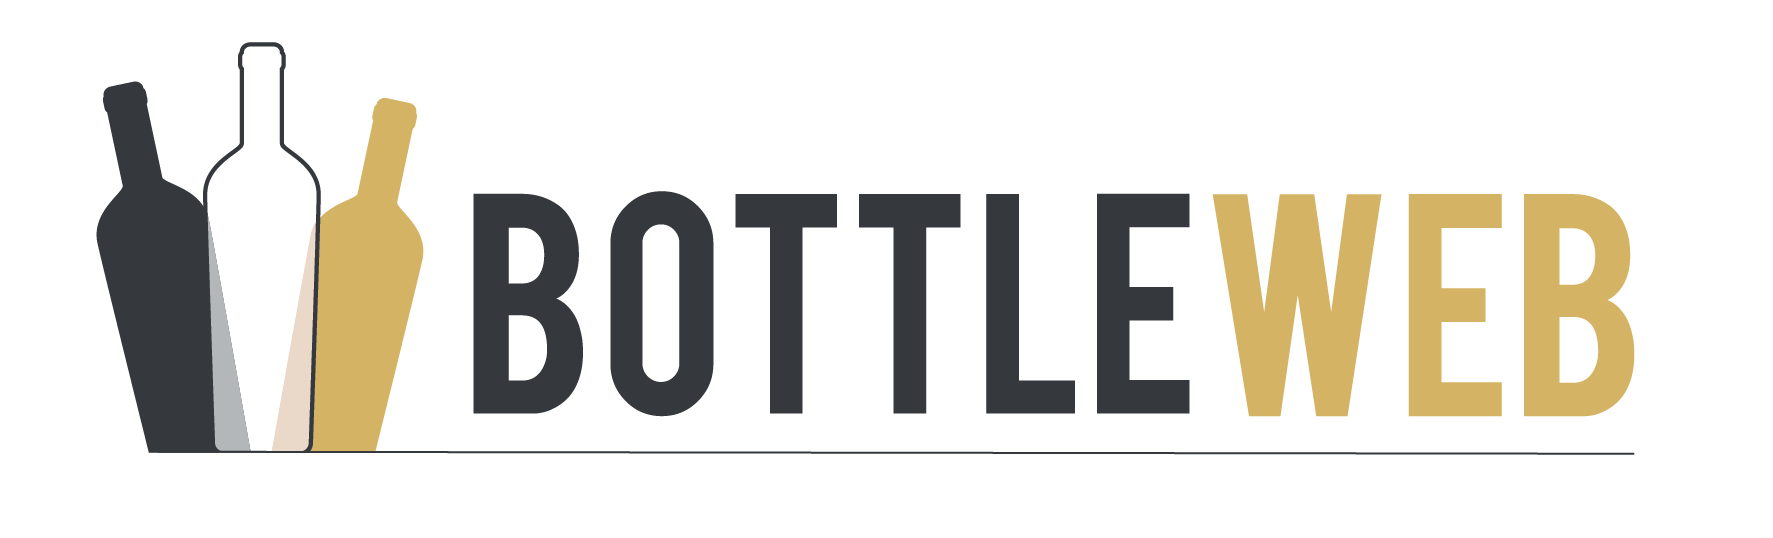 Welkom bij BottleWeb– Bottleweb